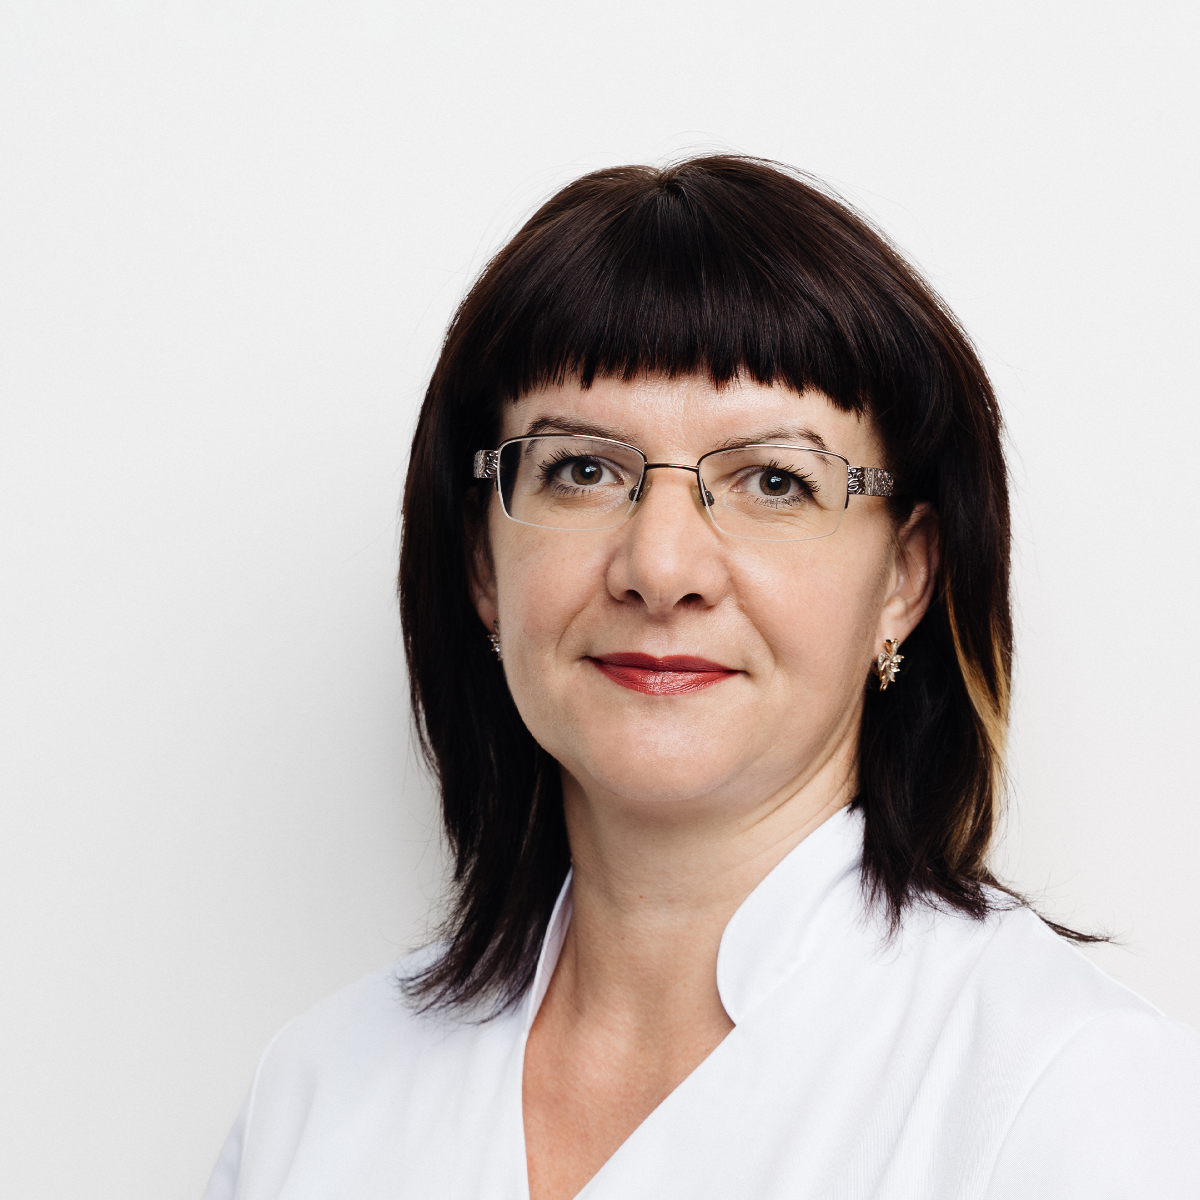 Julia Kononova, higienistka stomatologiczna oraz asystentka stomatologiczna w gabinecie stomatologicznym EstiDental w Krakowie